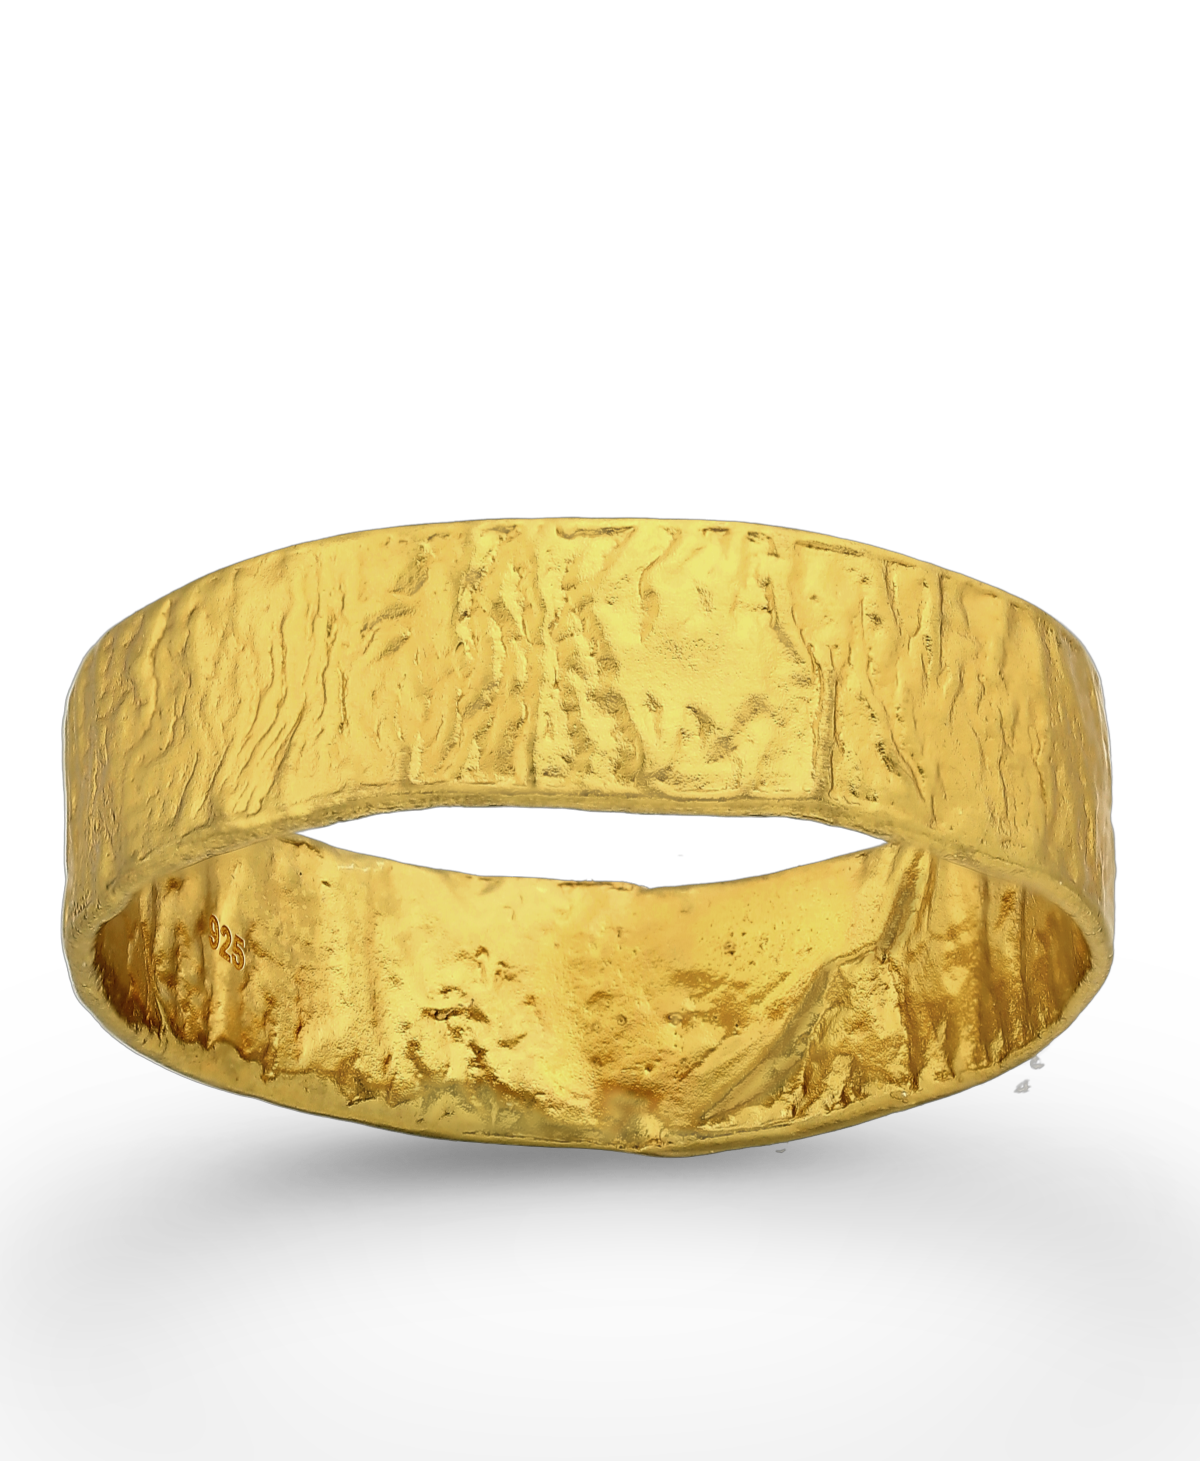 Gold Vermeil 18K Band Ring